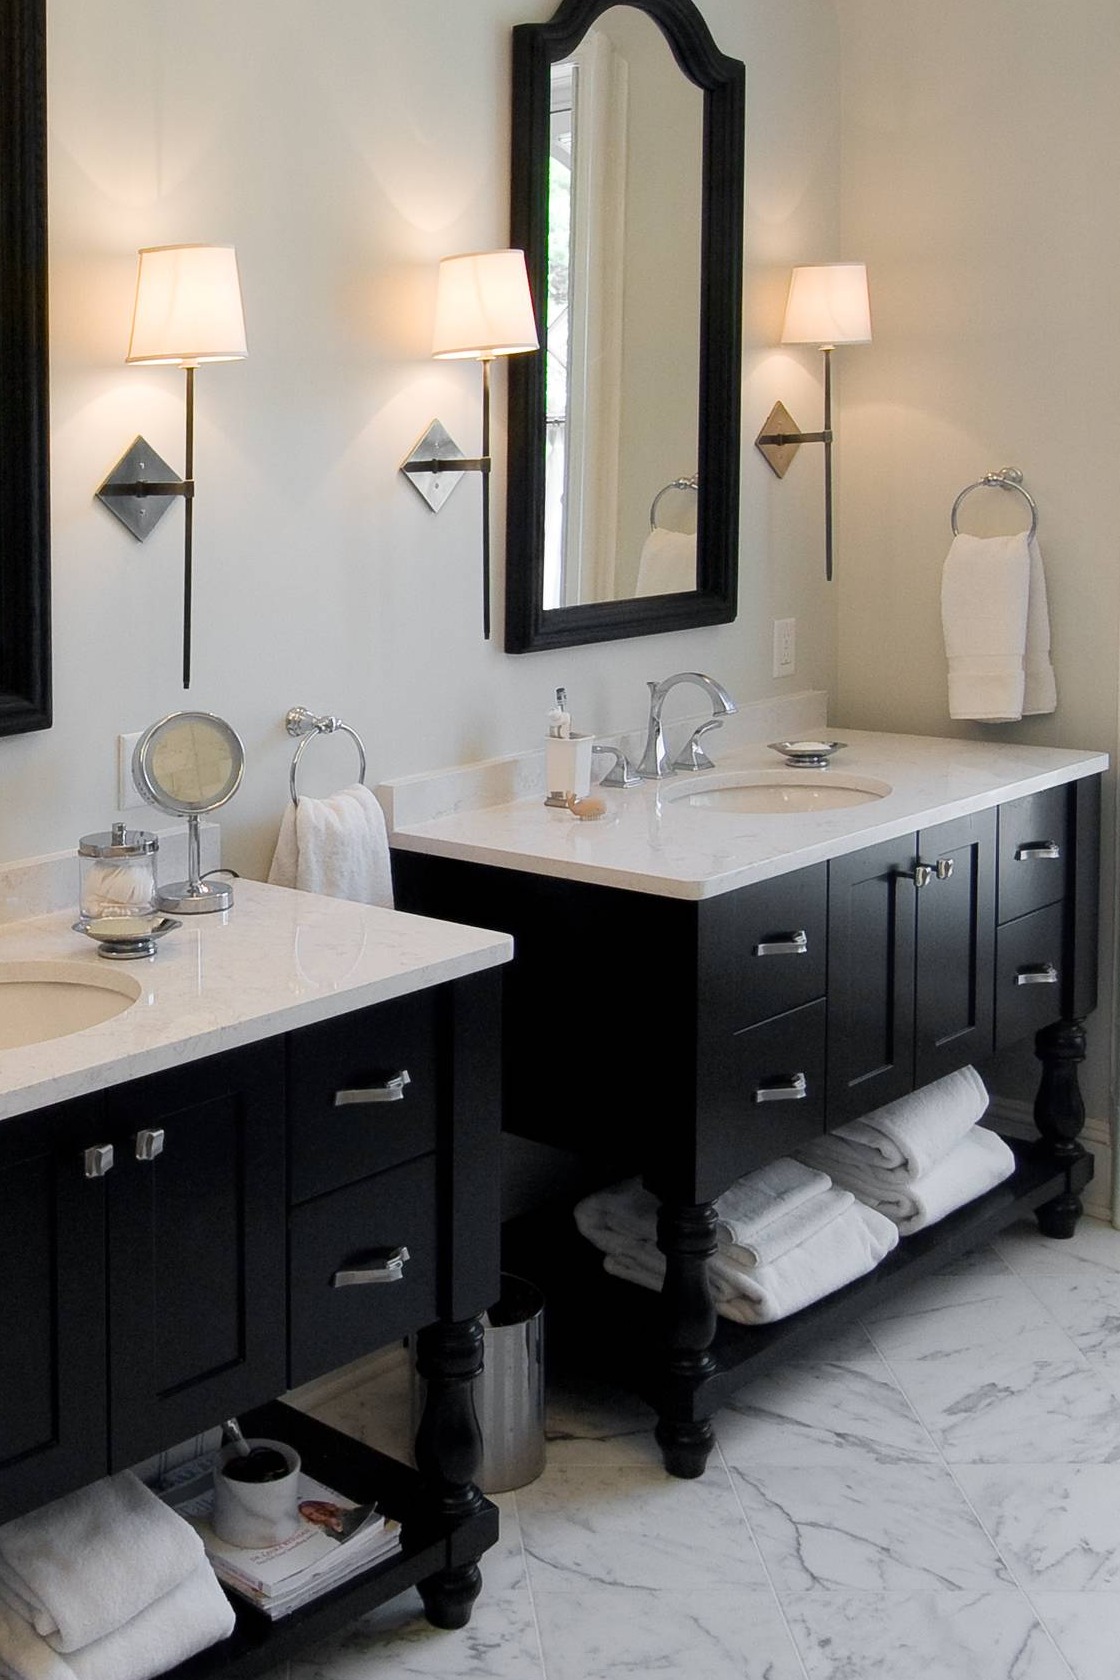 White Quartz Countertops Black Bathroom Vanity Cabinets Marble Floor Tiles